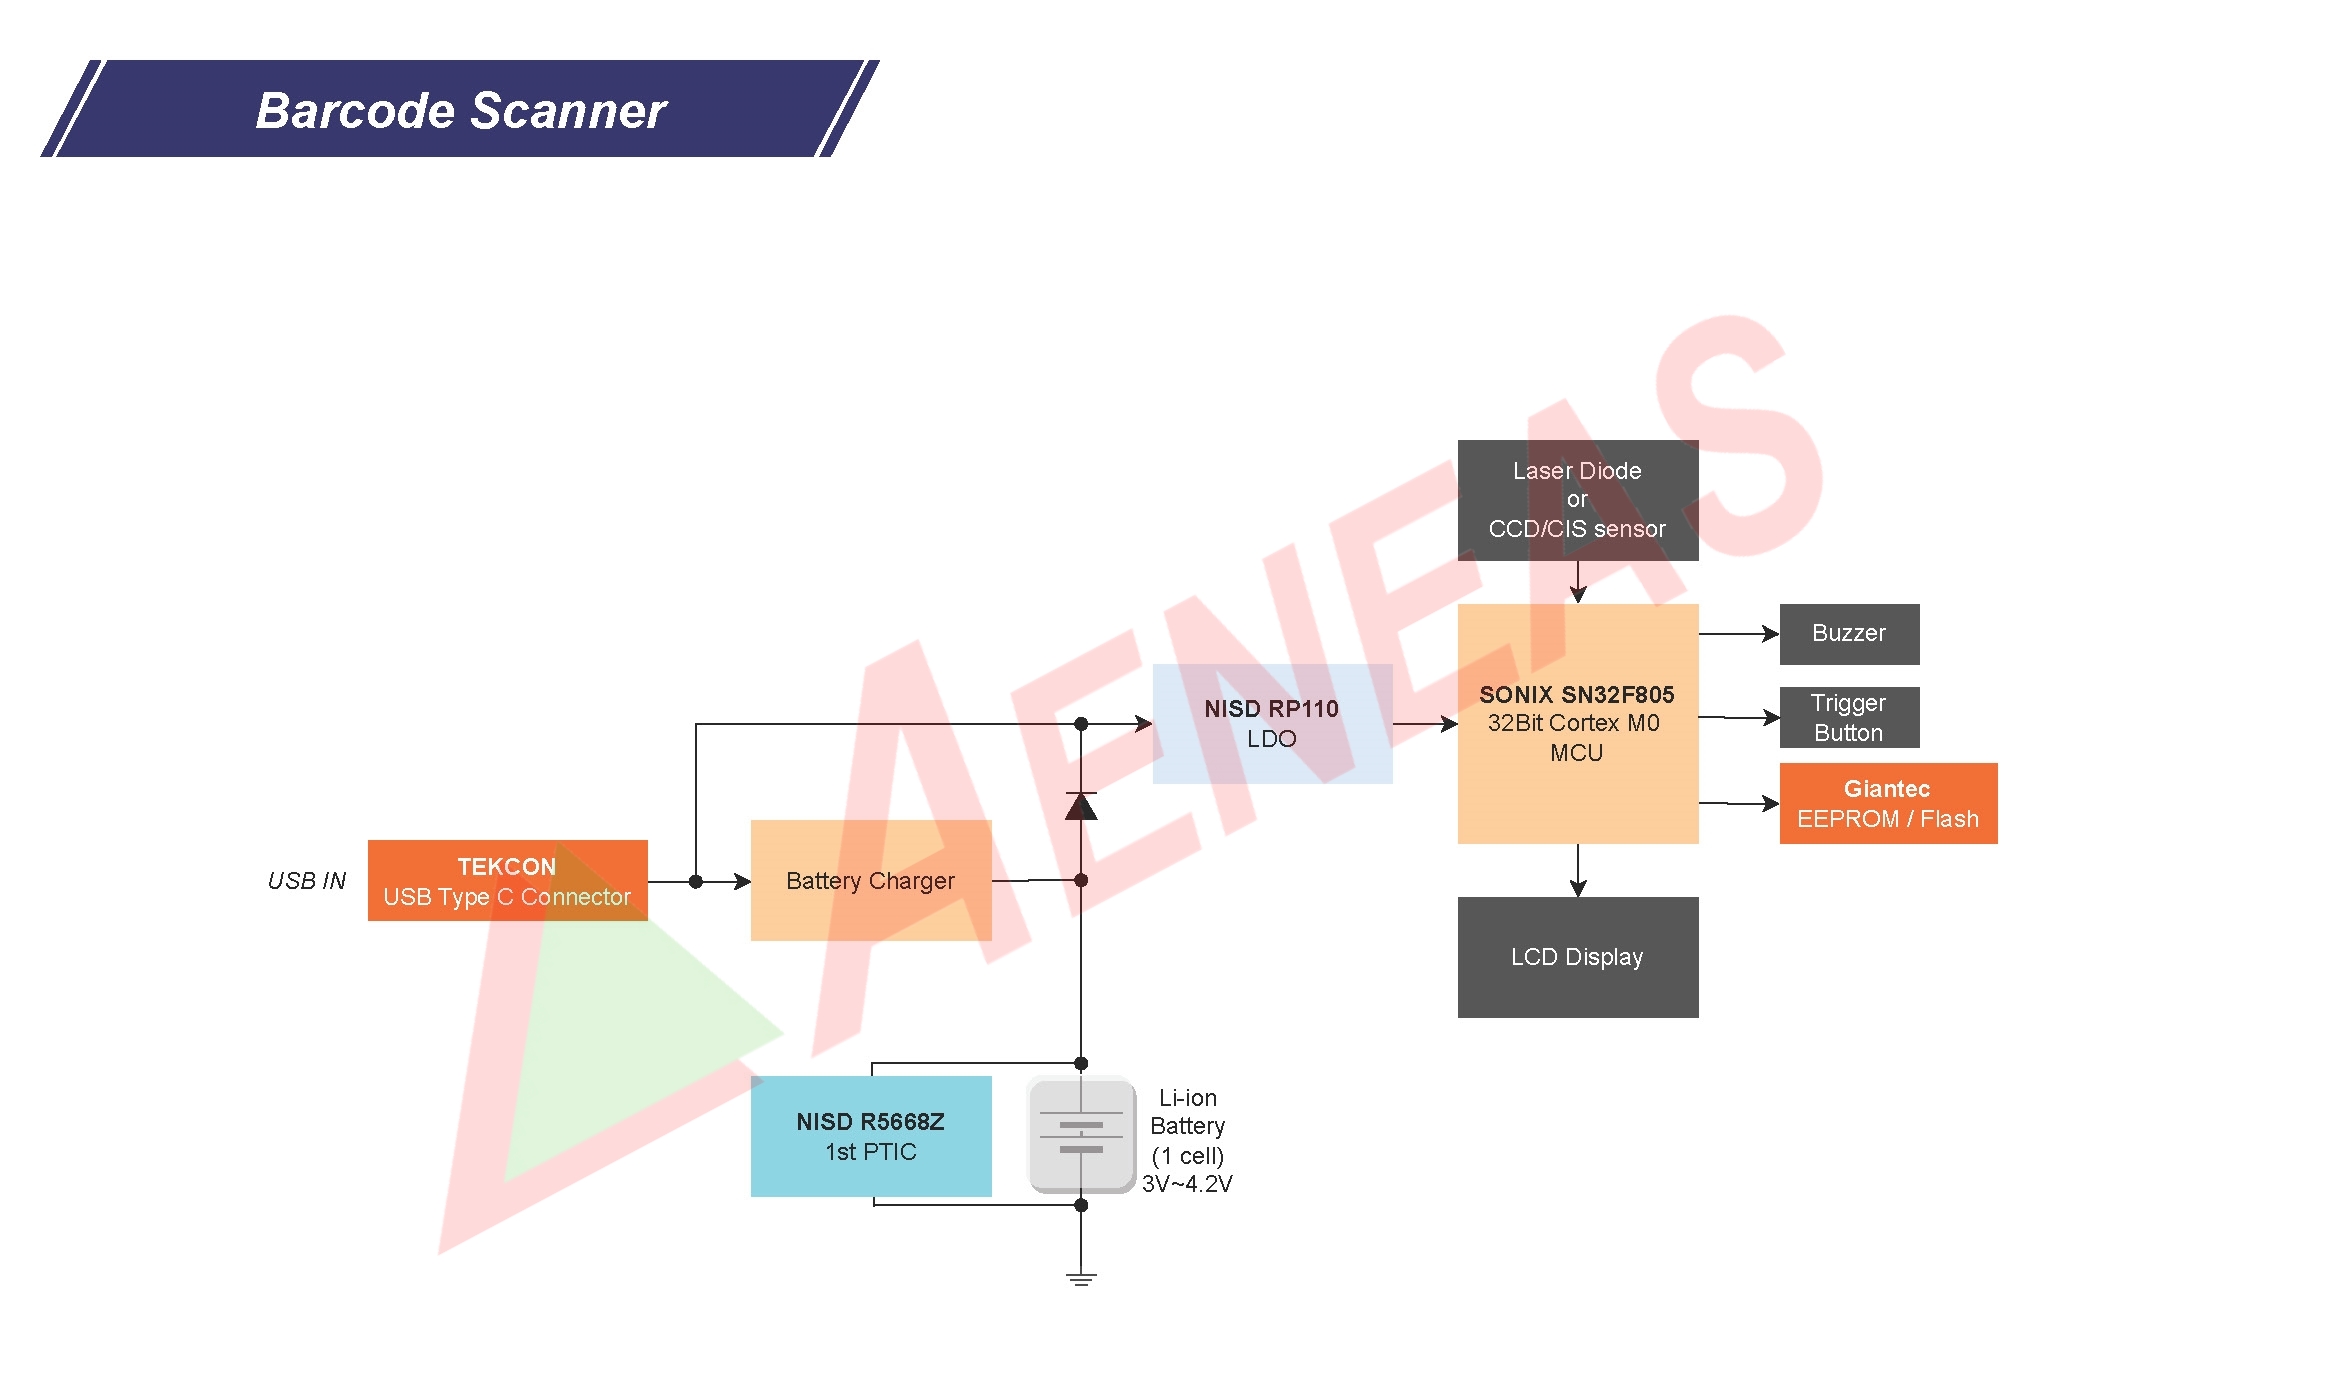 Application Block for Barcode Scanner